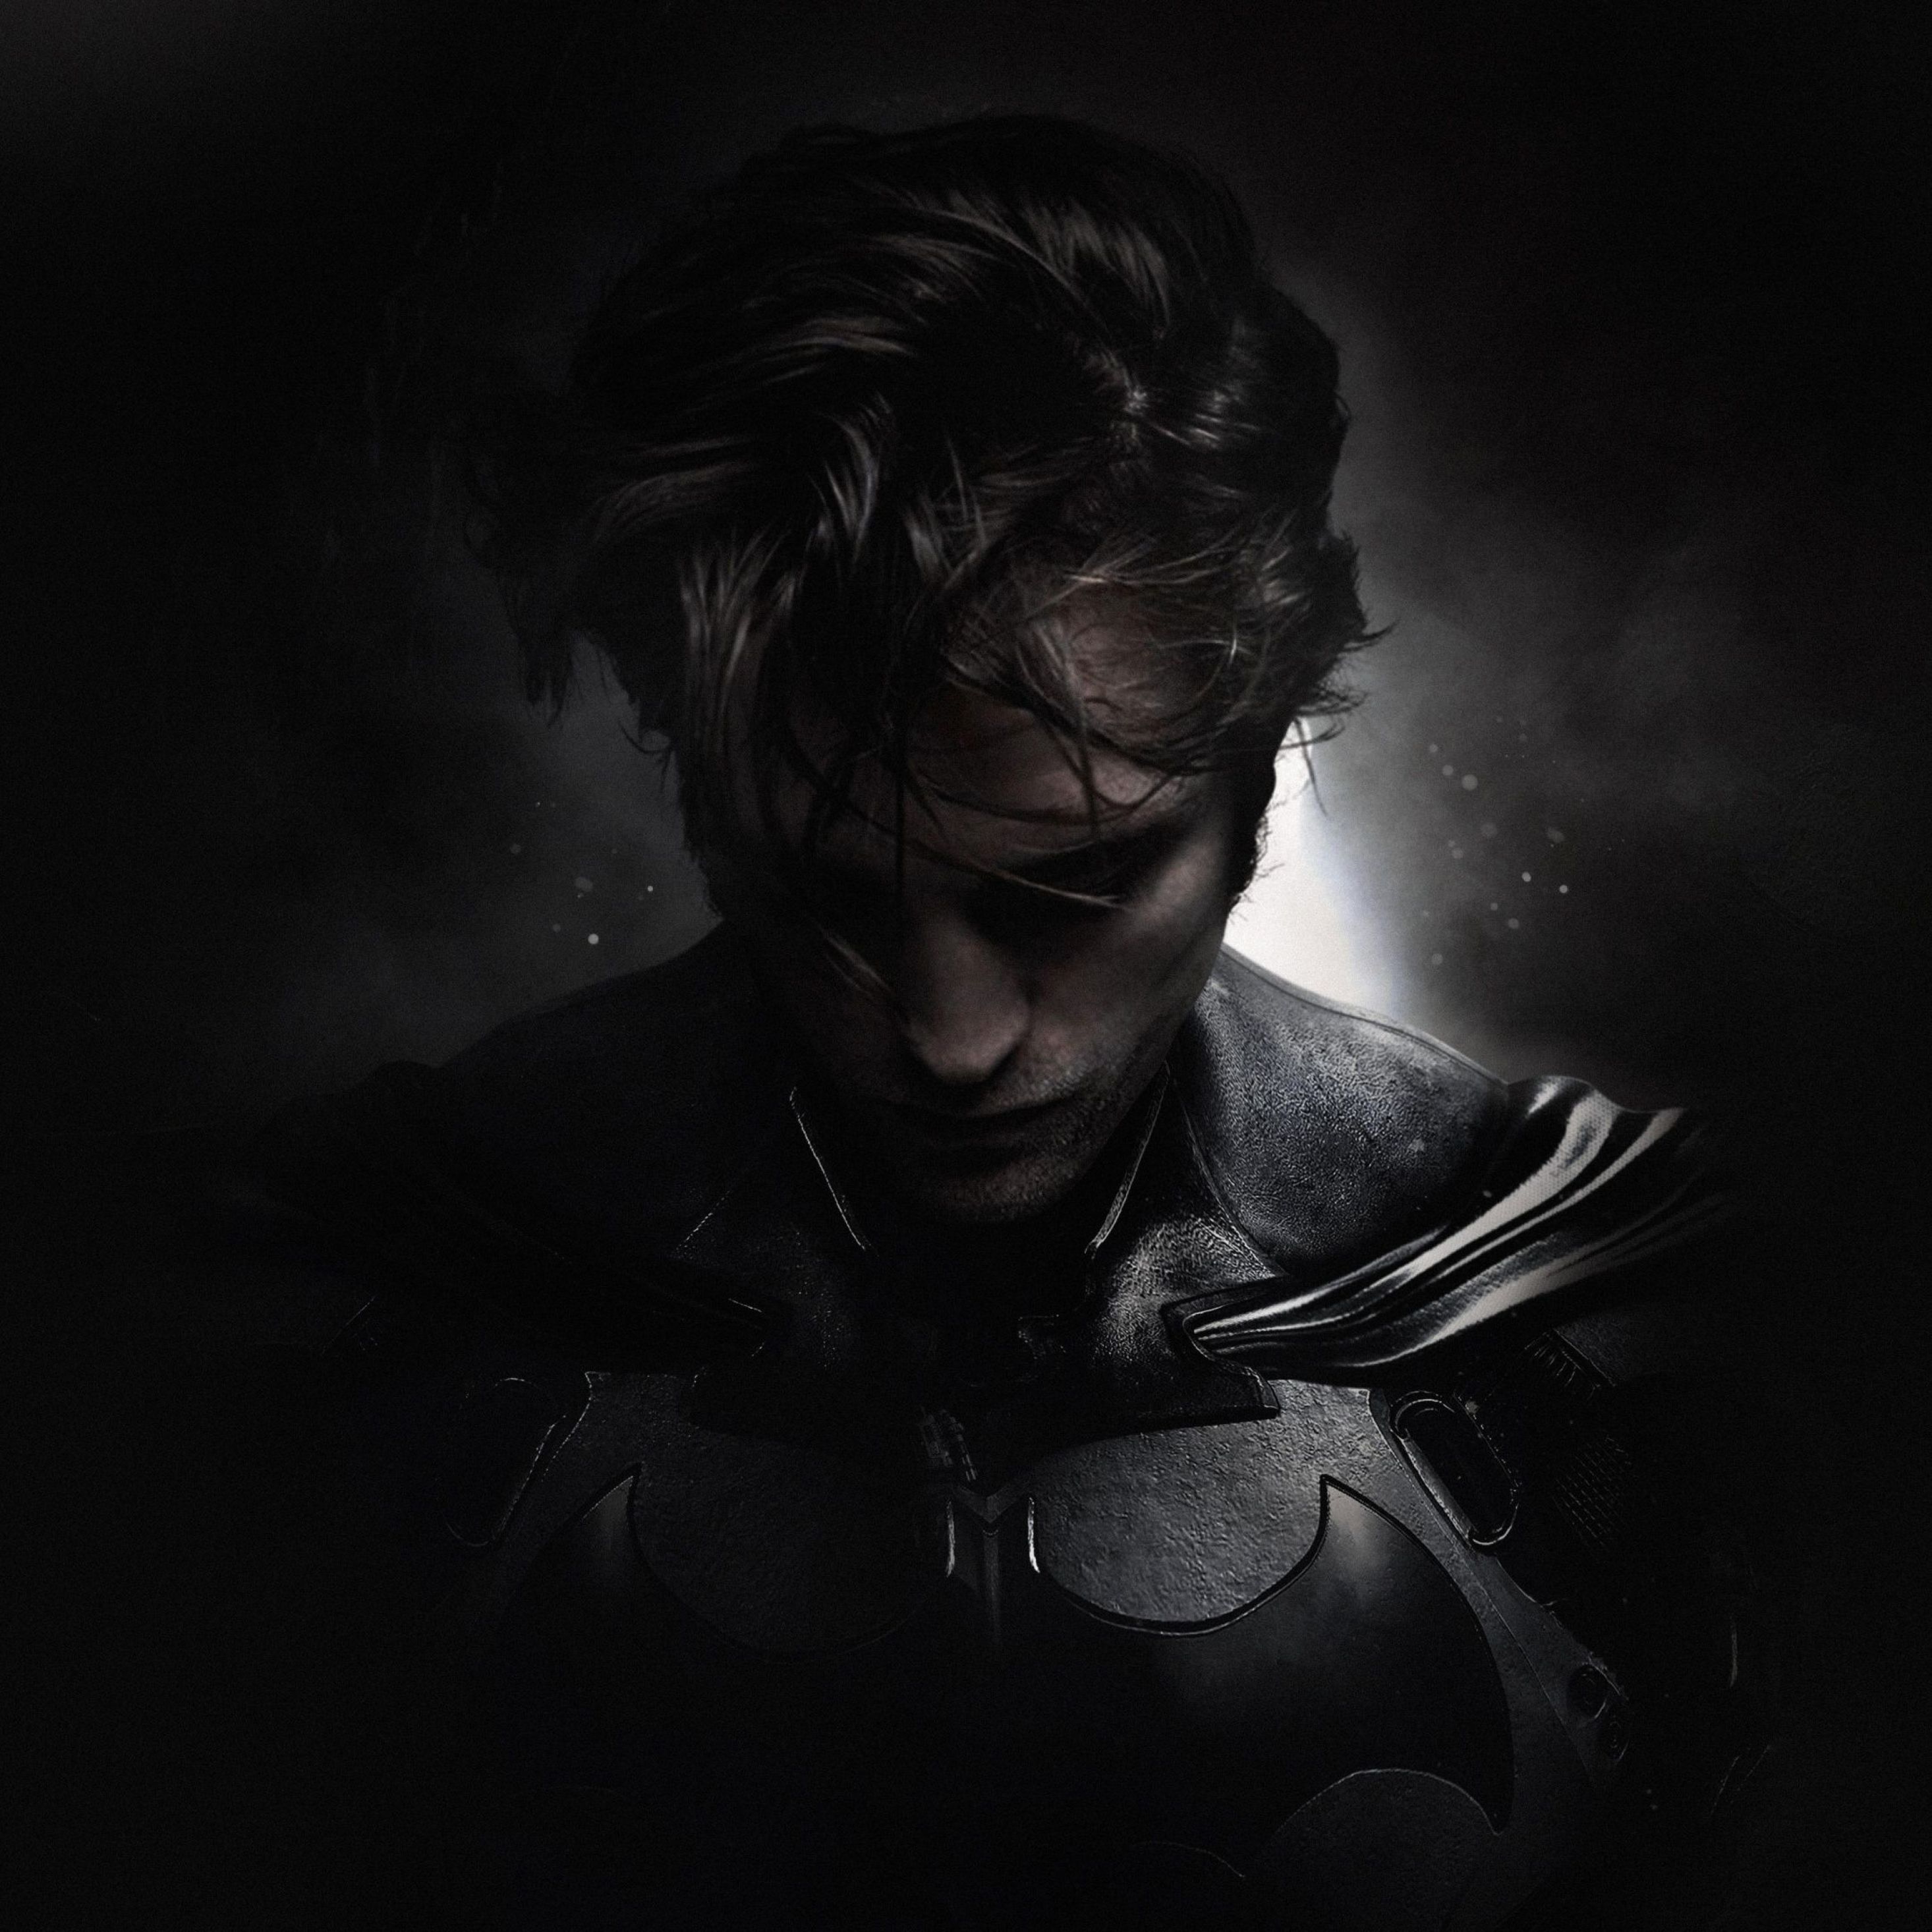 The Batman Robert Pattinson 2021 Poster iPad Pro Retina Display Wallpaper, HD Movies 4K Wallpaper, Image, Photo and Background